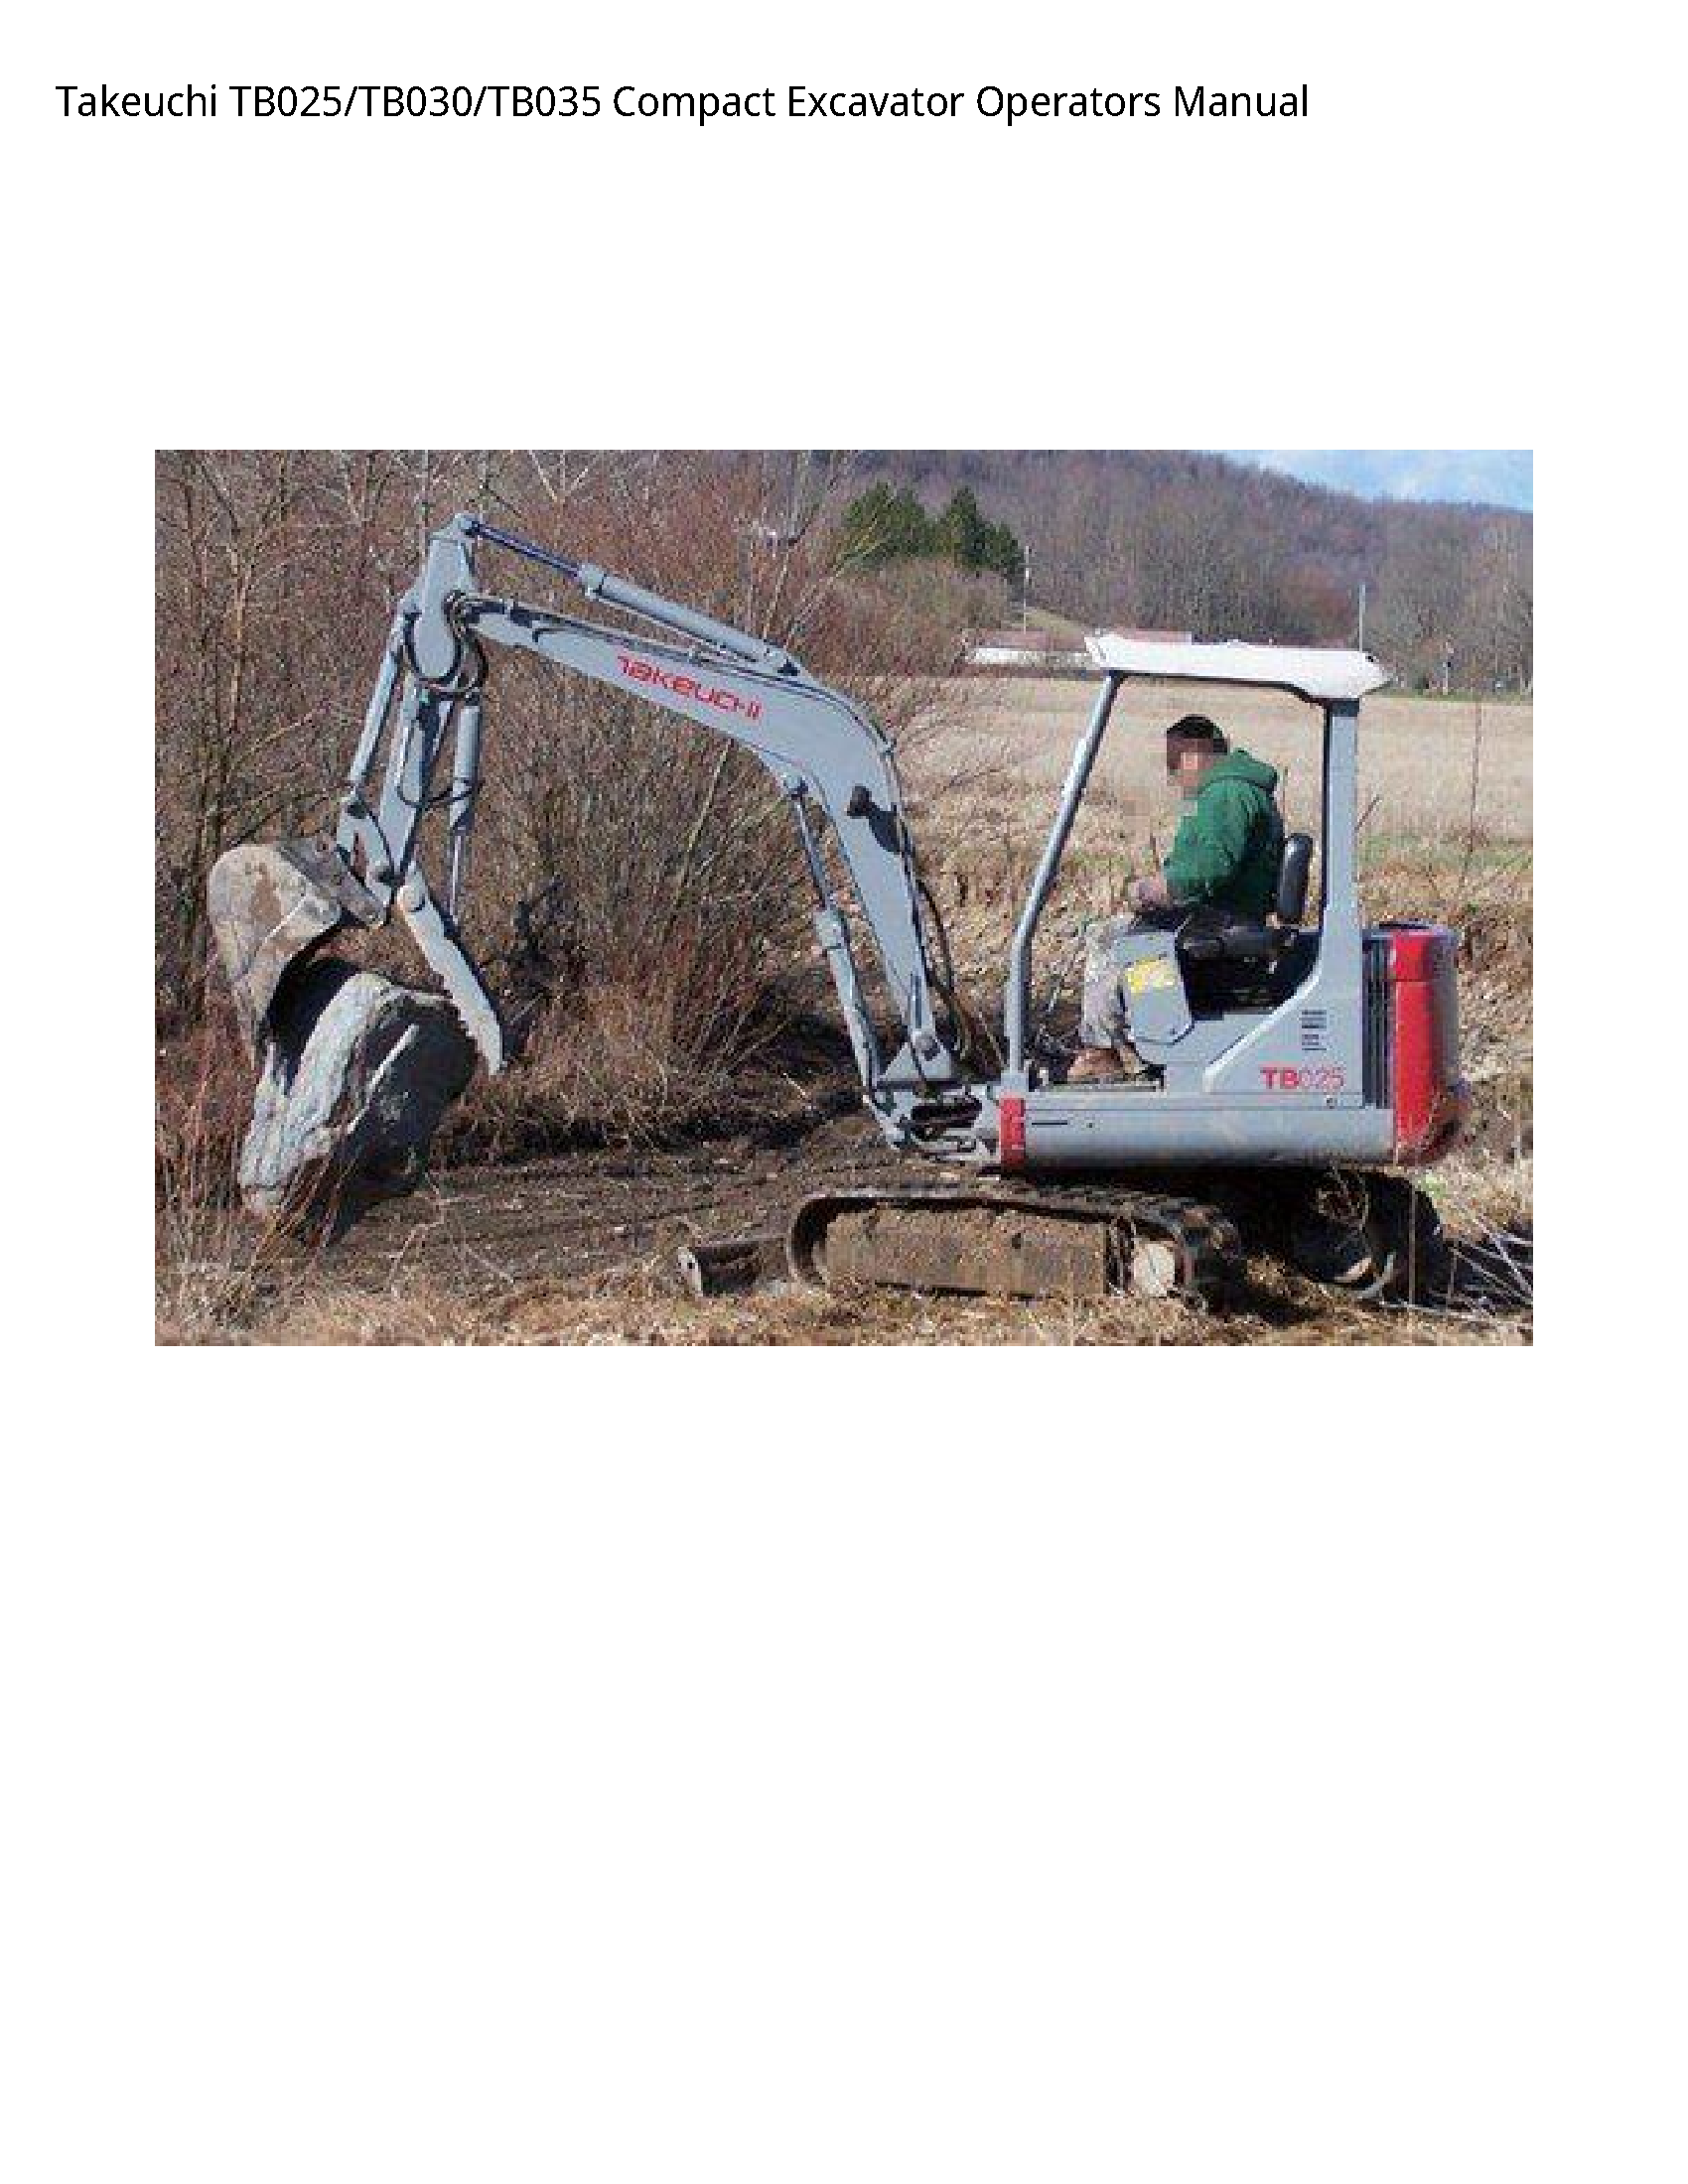 Takeuchi TB025 Compact Excavator Operators manual